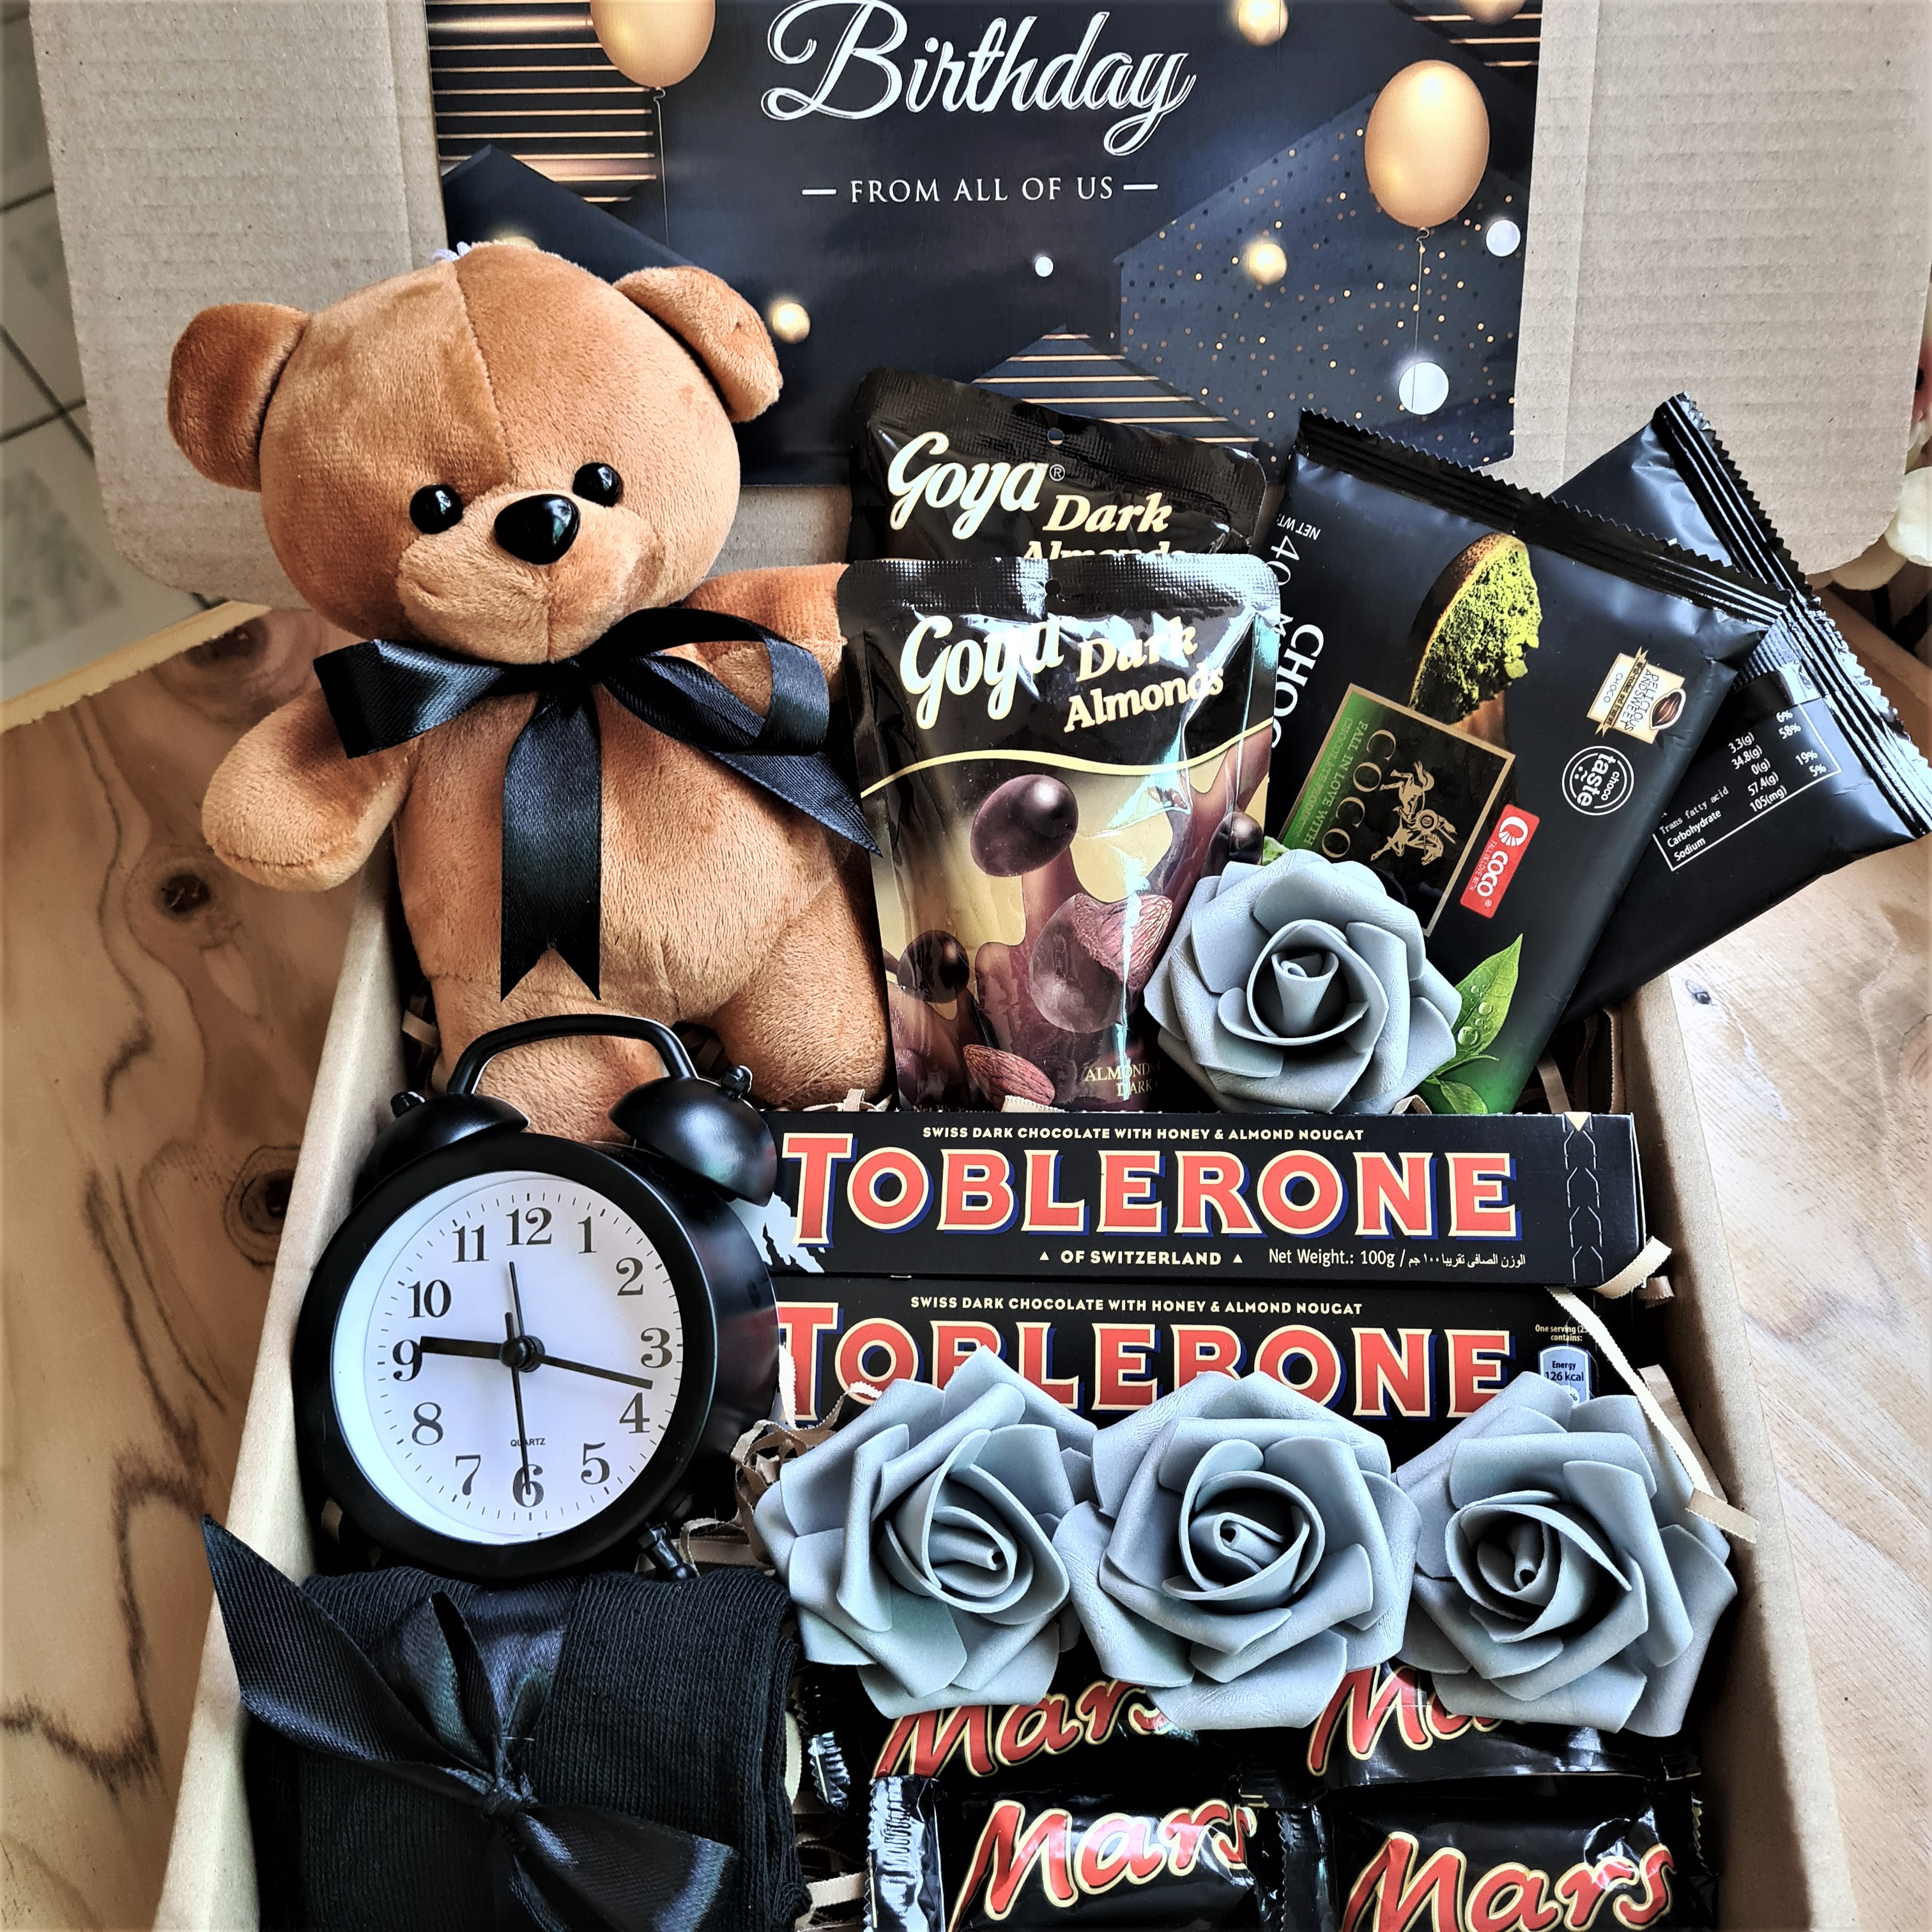 Premium Birthday Gifts For Boyfriend: 6 Premium Birthday Gifts for Boyfriend:  Make his birthday extraordinary with a premium surprise - The Economic Times